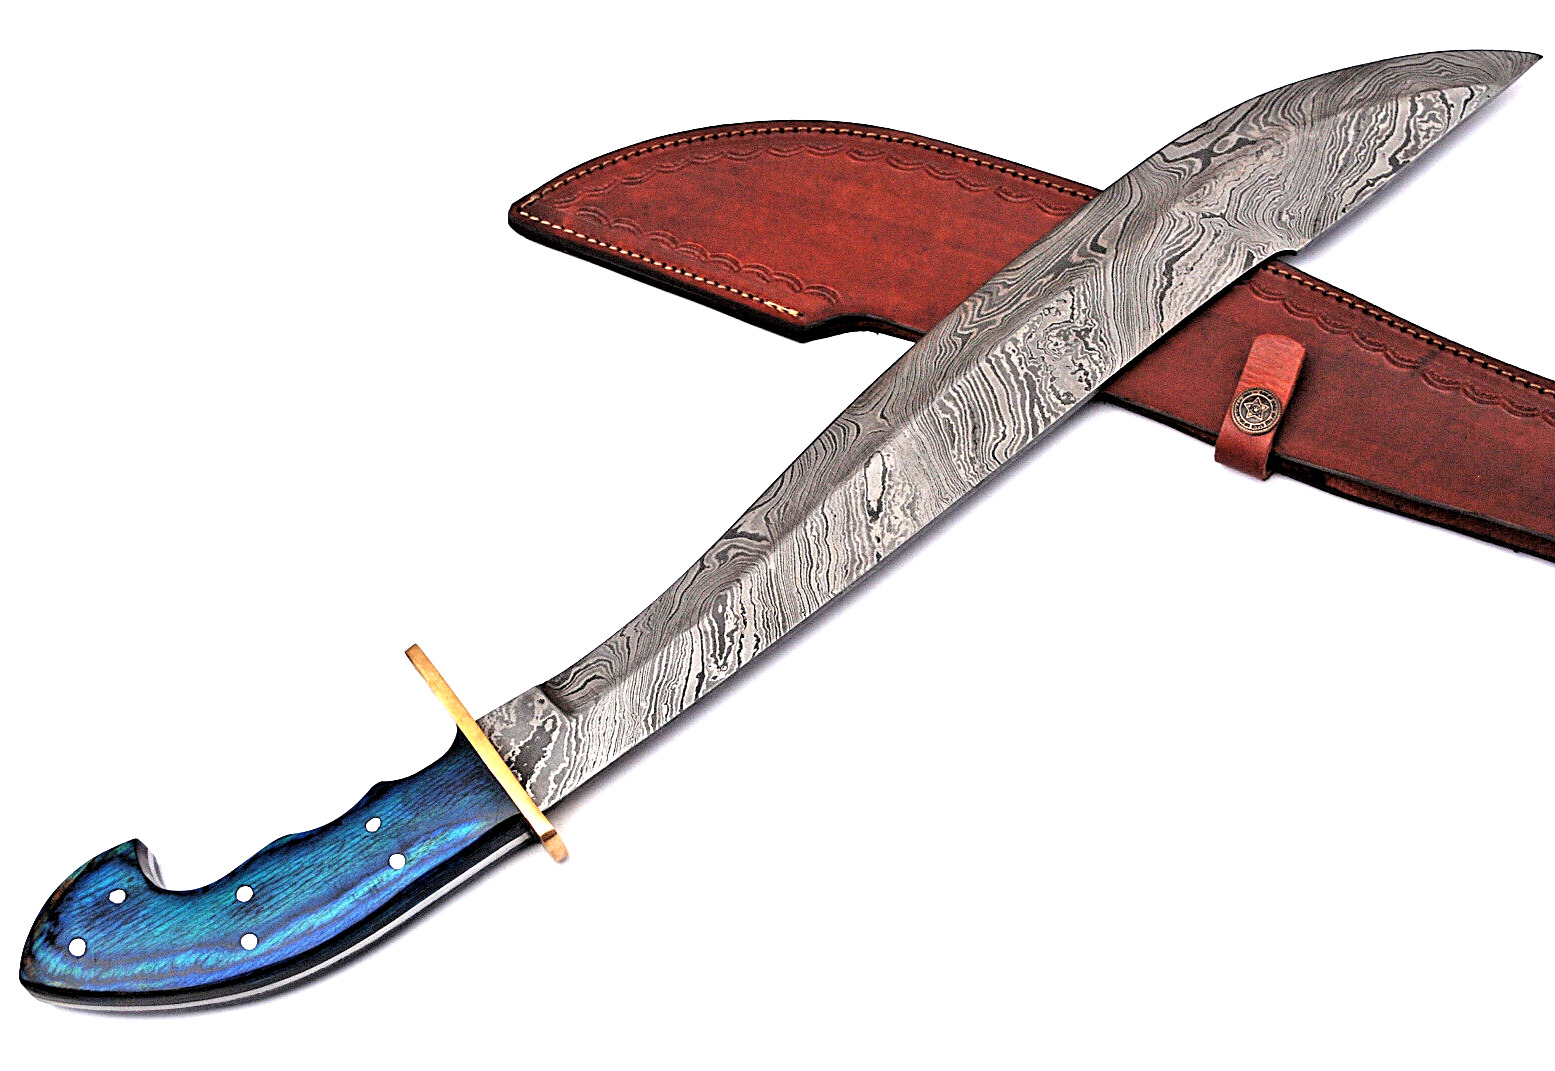 Cutlass Sabre Warrior Custom Made Damascus Sword -Hand Forge Damascus Steel 1659